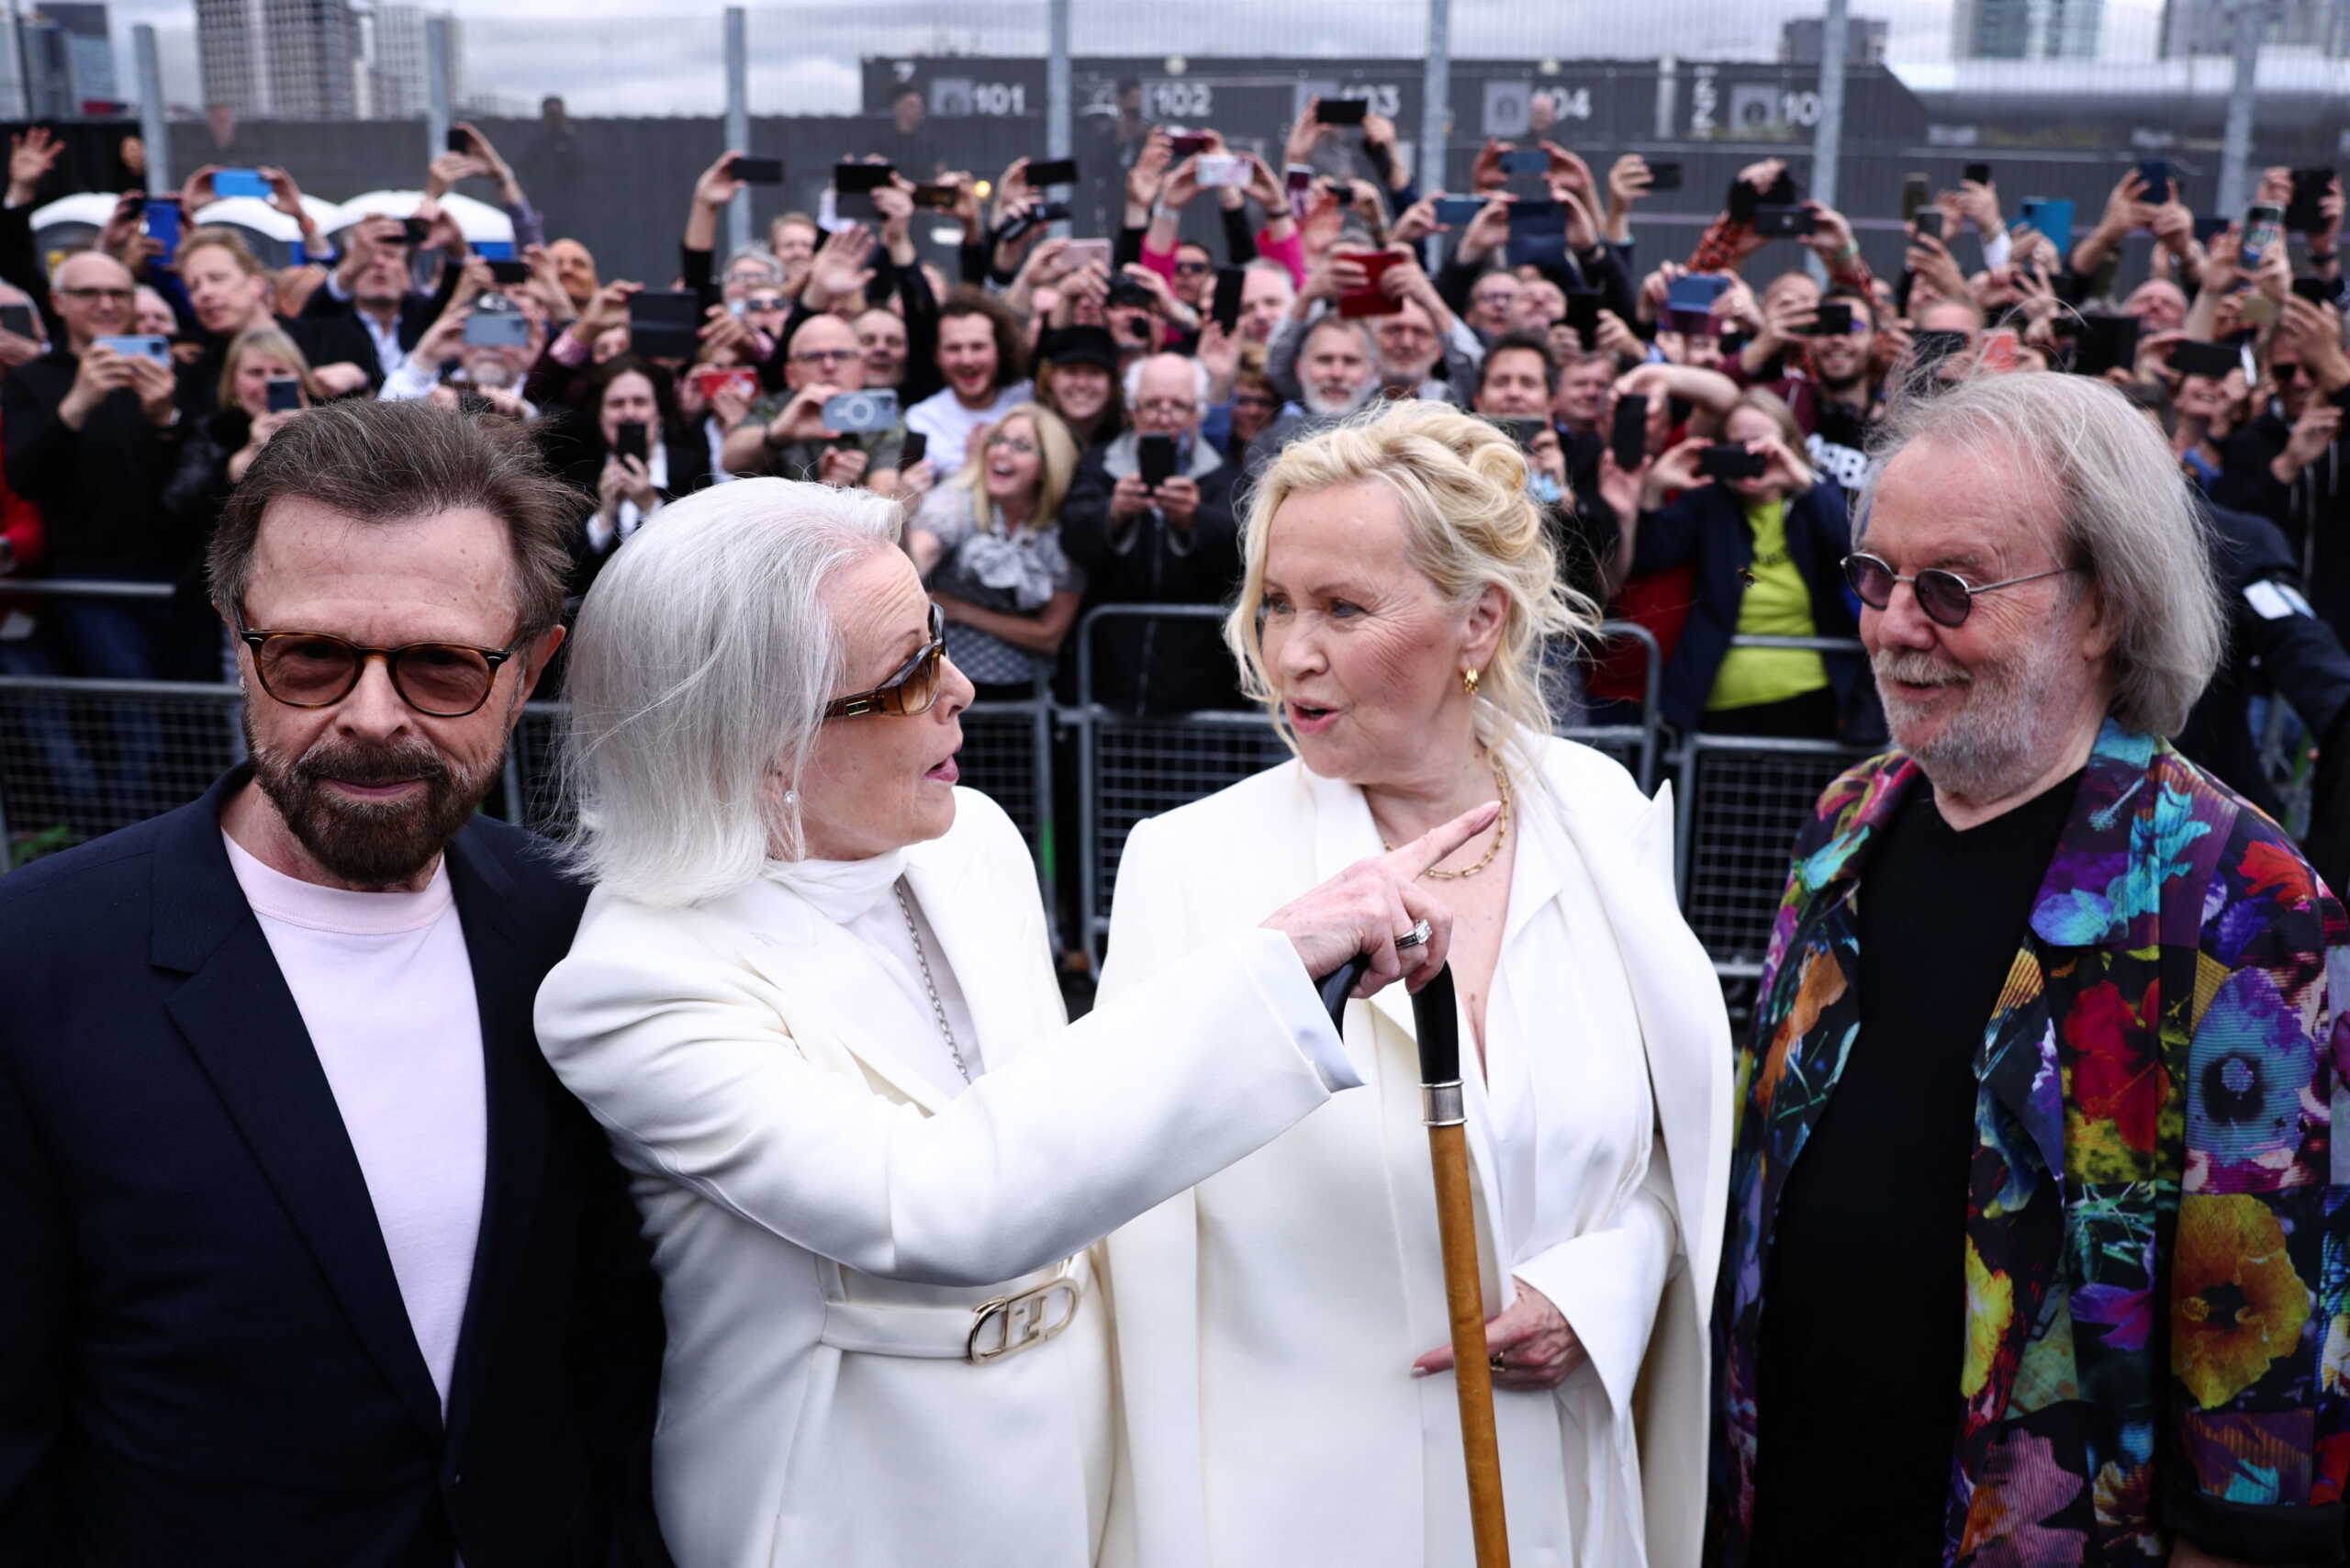 ABBA: Ξανά μαζί μετά από 36 χρόνια στην πρεμιέρα της συναυλίας «Voyage» στο Λονδίνο